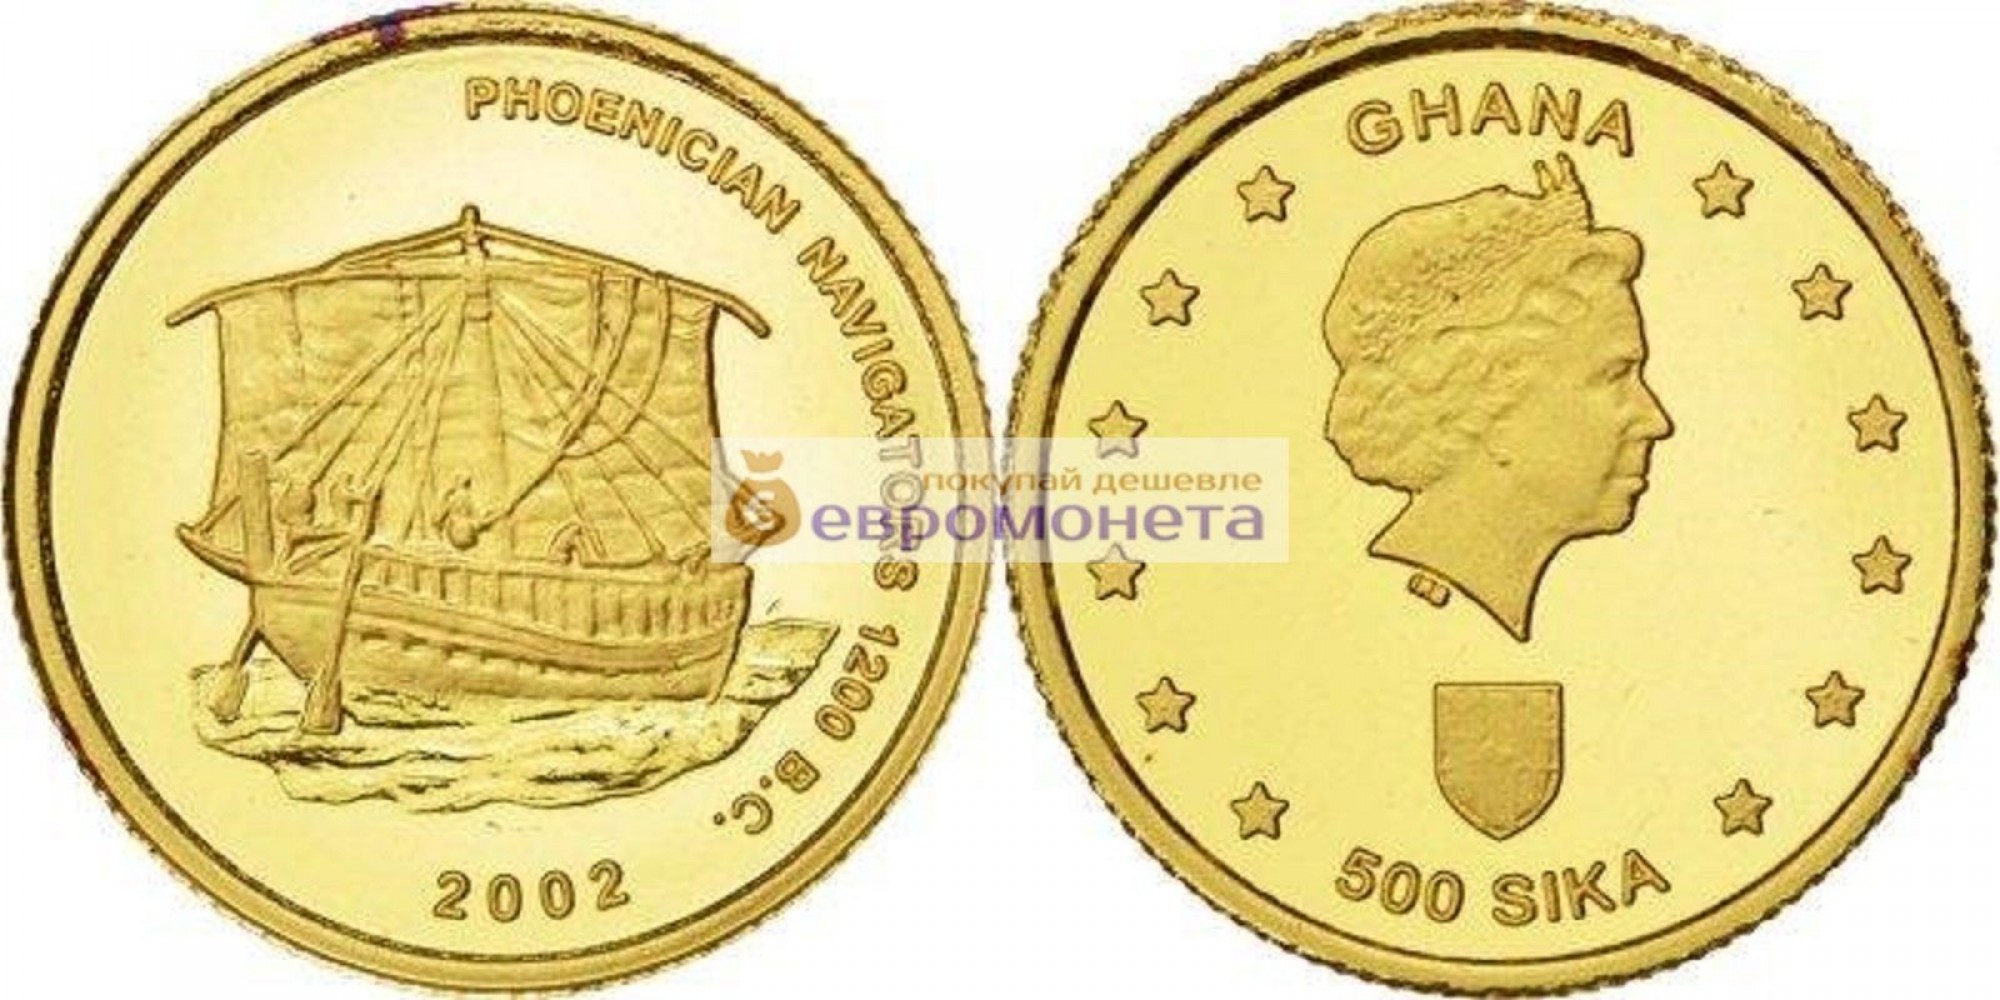 Республика Гана 500 сика 2002 год. Финикийские мореплаватели. Золото.